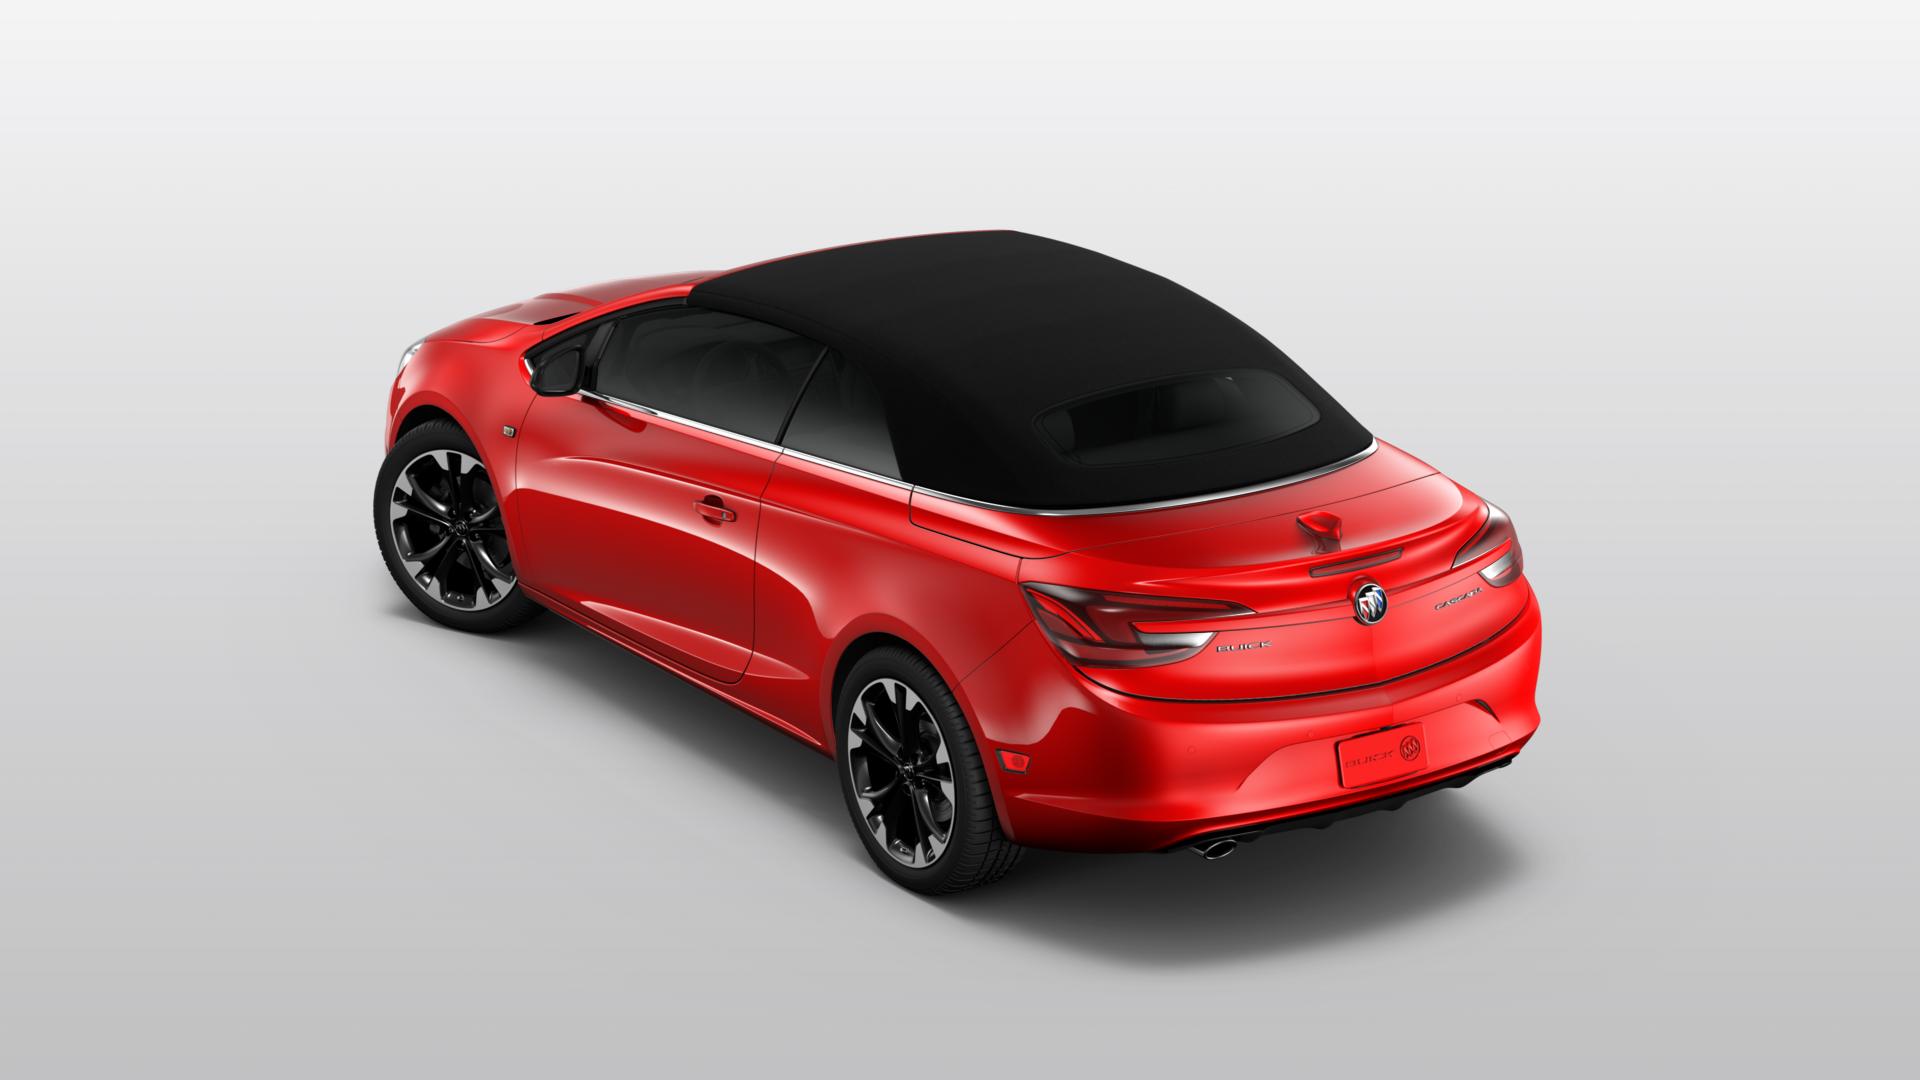 Buick Cascada Premium 2017 rear cross view